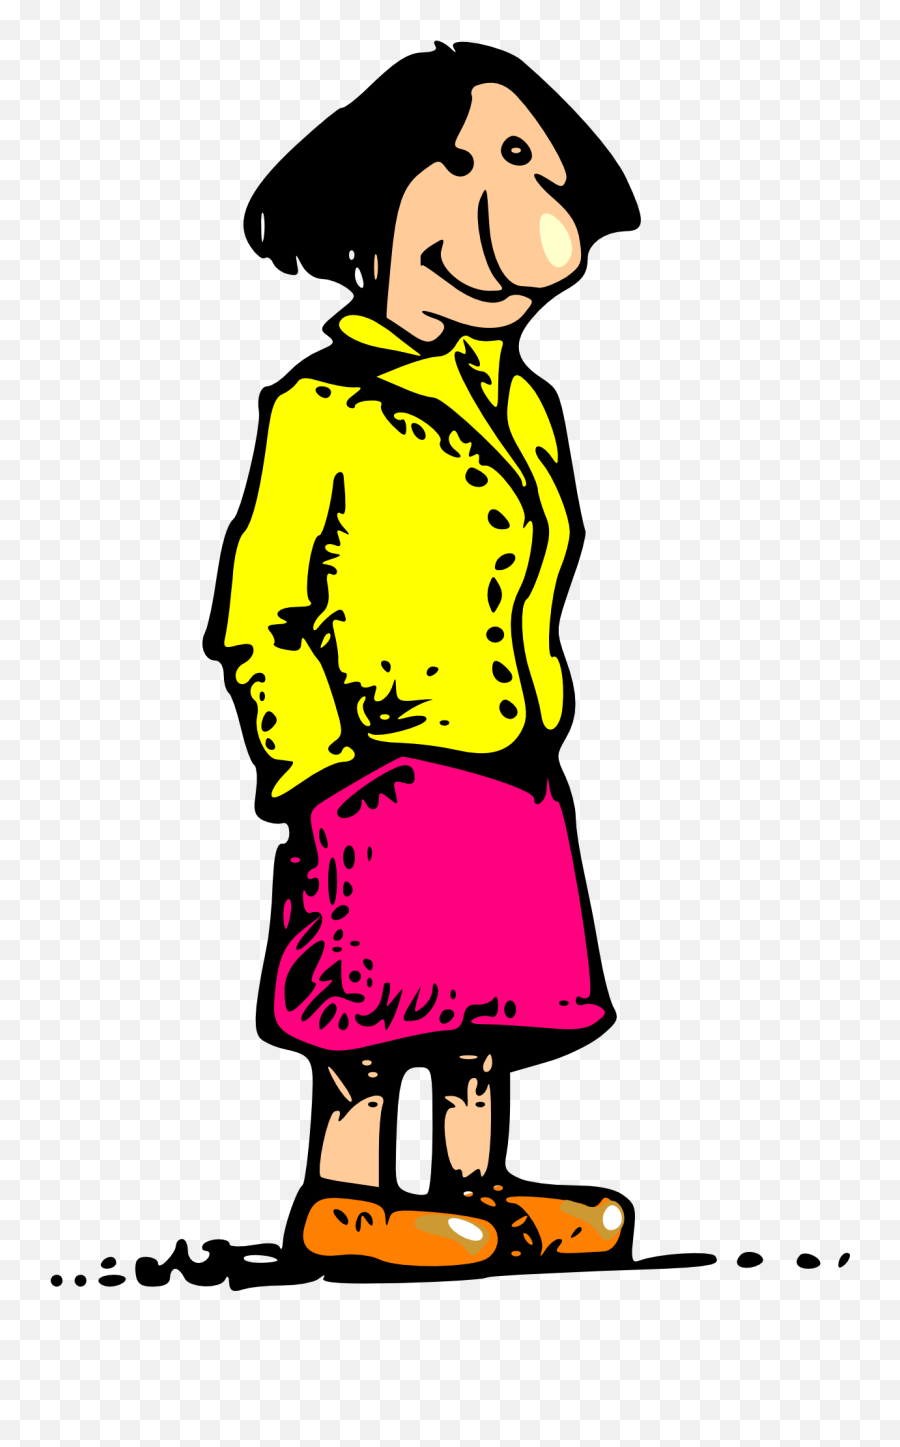 Cartoon Woman With Big Nose Free Image - If Sunday Then Monday Emoji,Ca Rtoon Girl Stamding Emotions